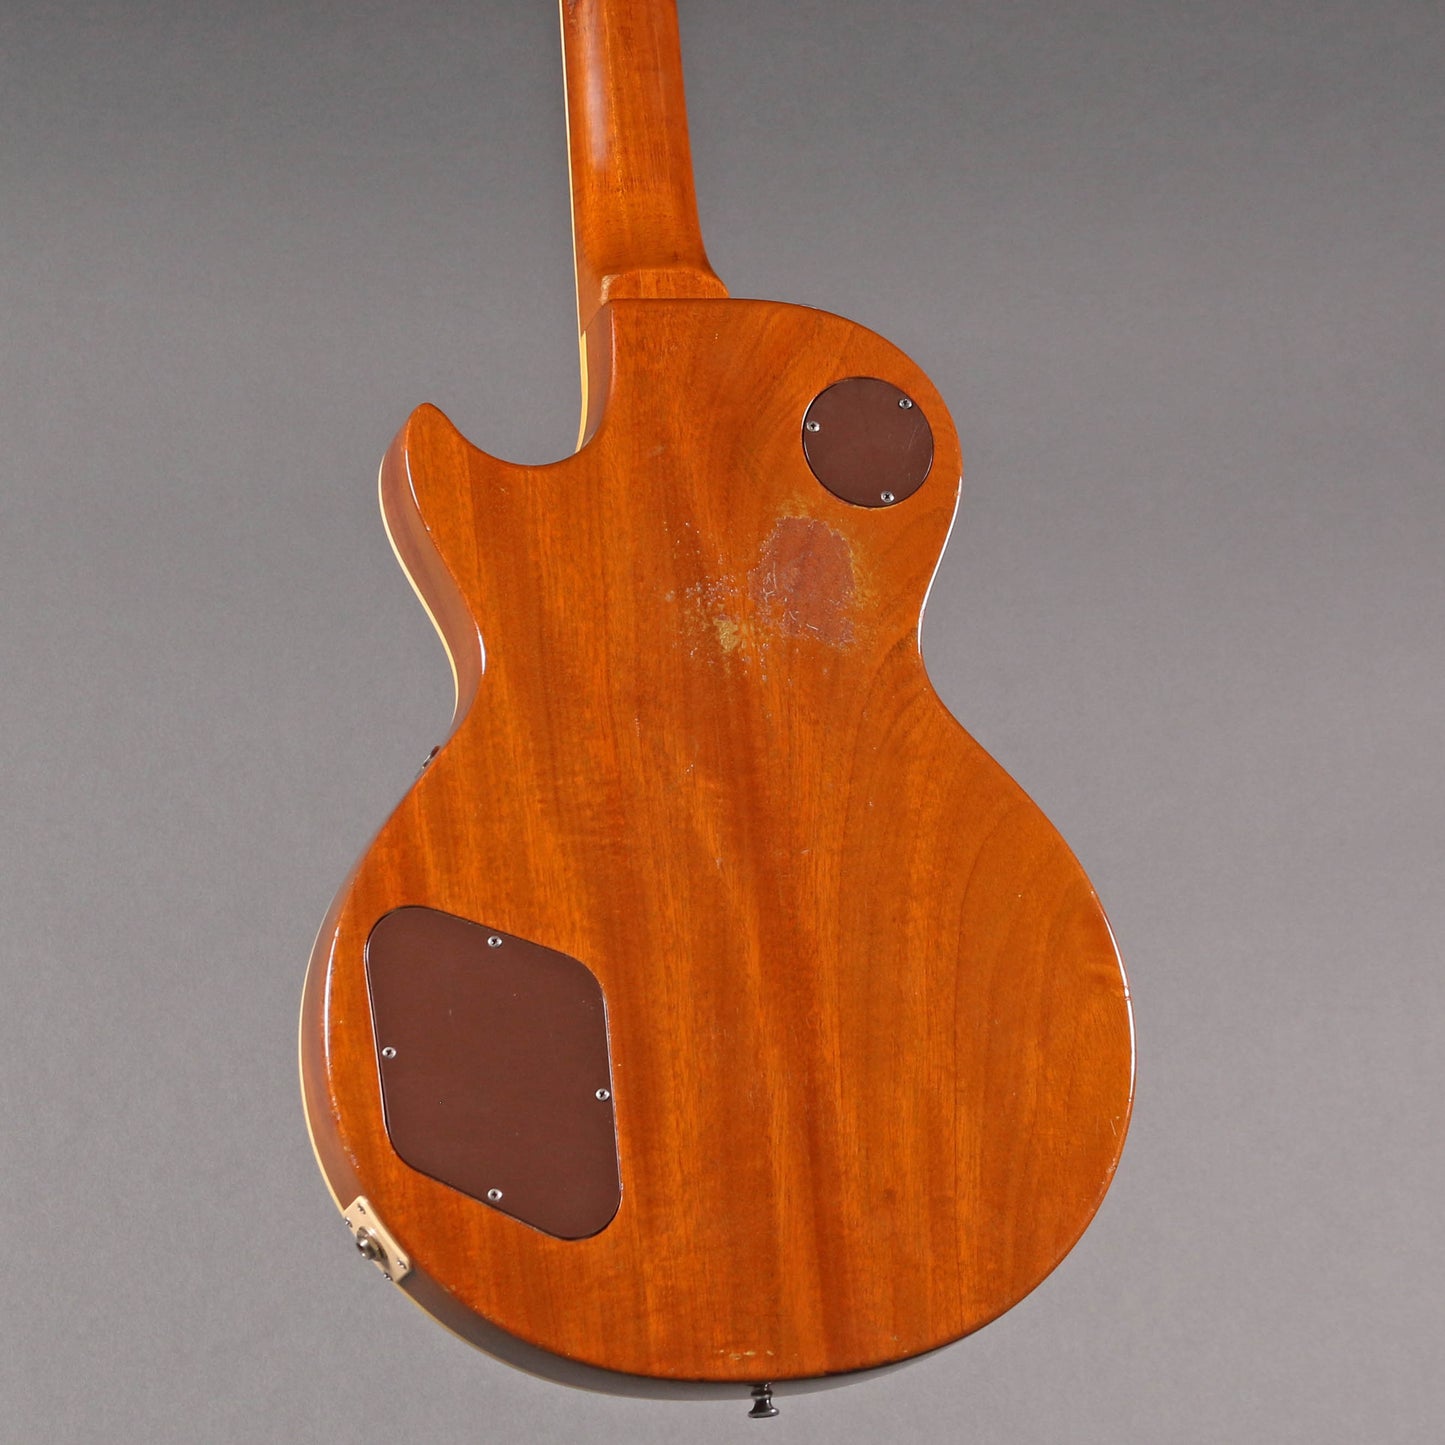 1969 Gibson Les Paul Deluxe Goldtop